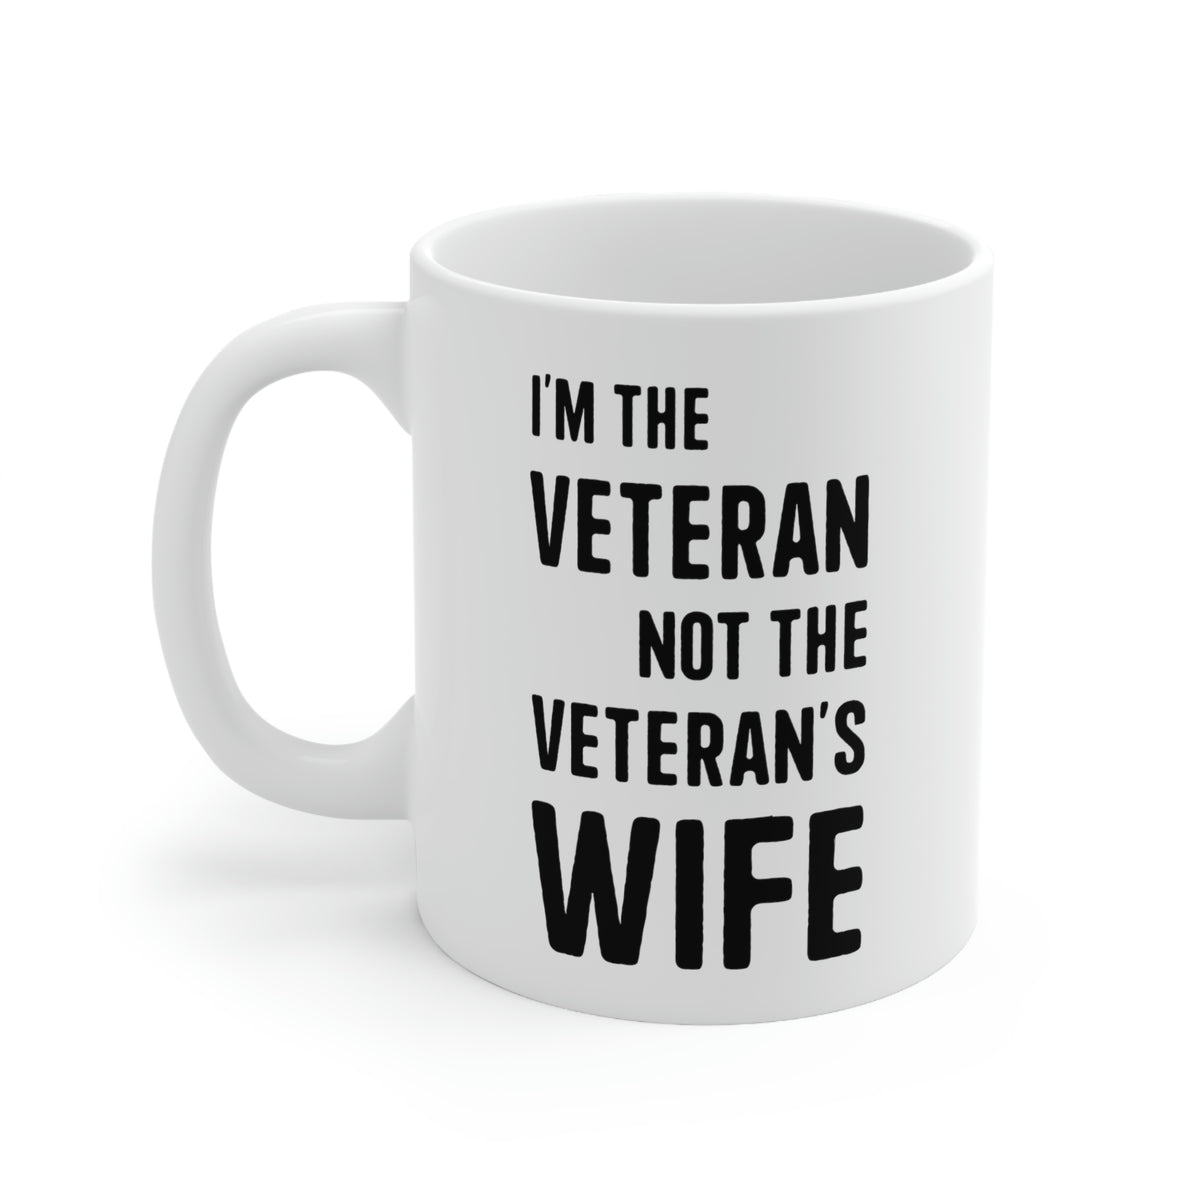 Veteran Coffee Mug - I'm the Veteran Not the Veteran's wife Cup - Retirement Gifts for Vietnam Army Navy Veterans